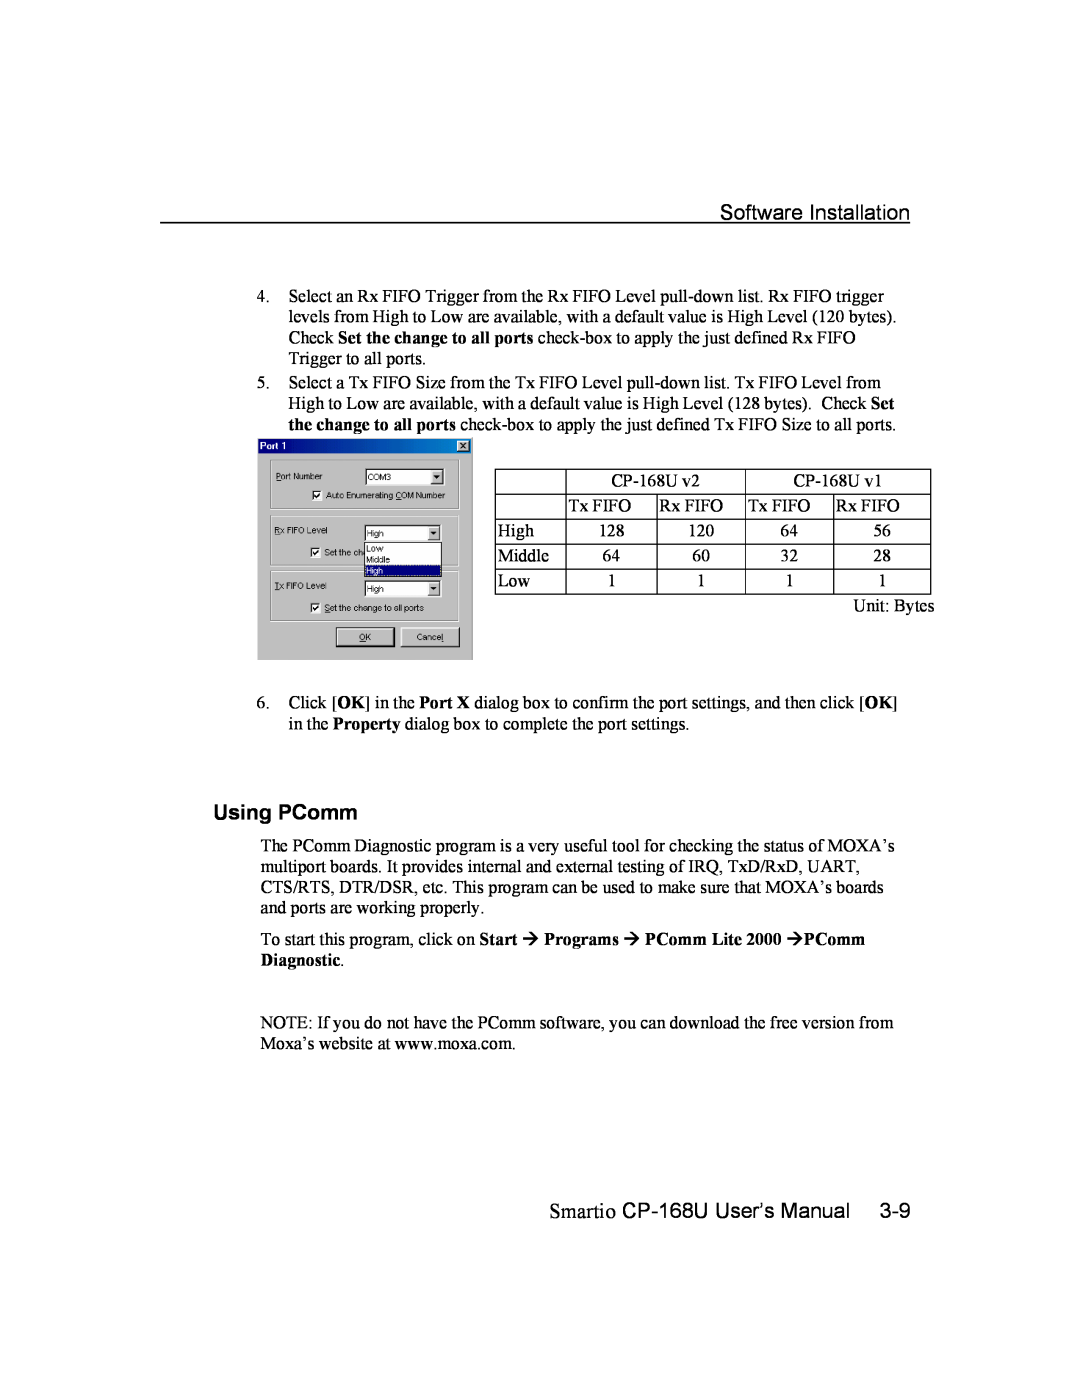 Moxa Technologies user manual Software Installation, Using PComm, Smartio CP-168U User’s Manual 